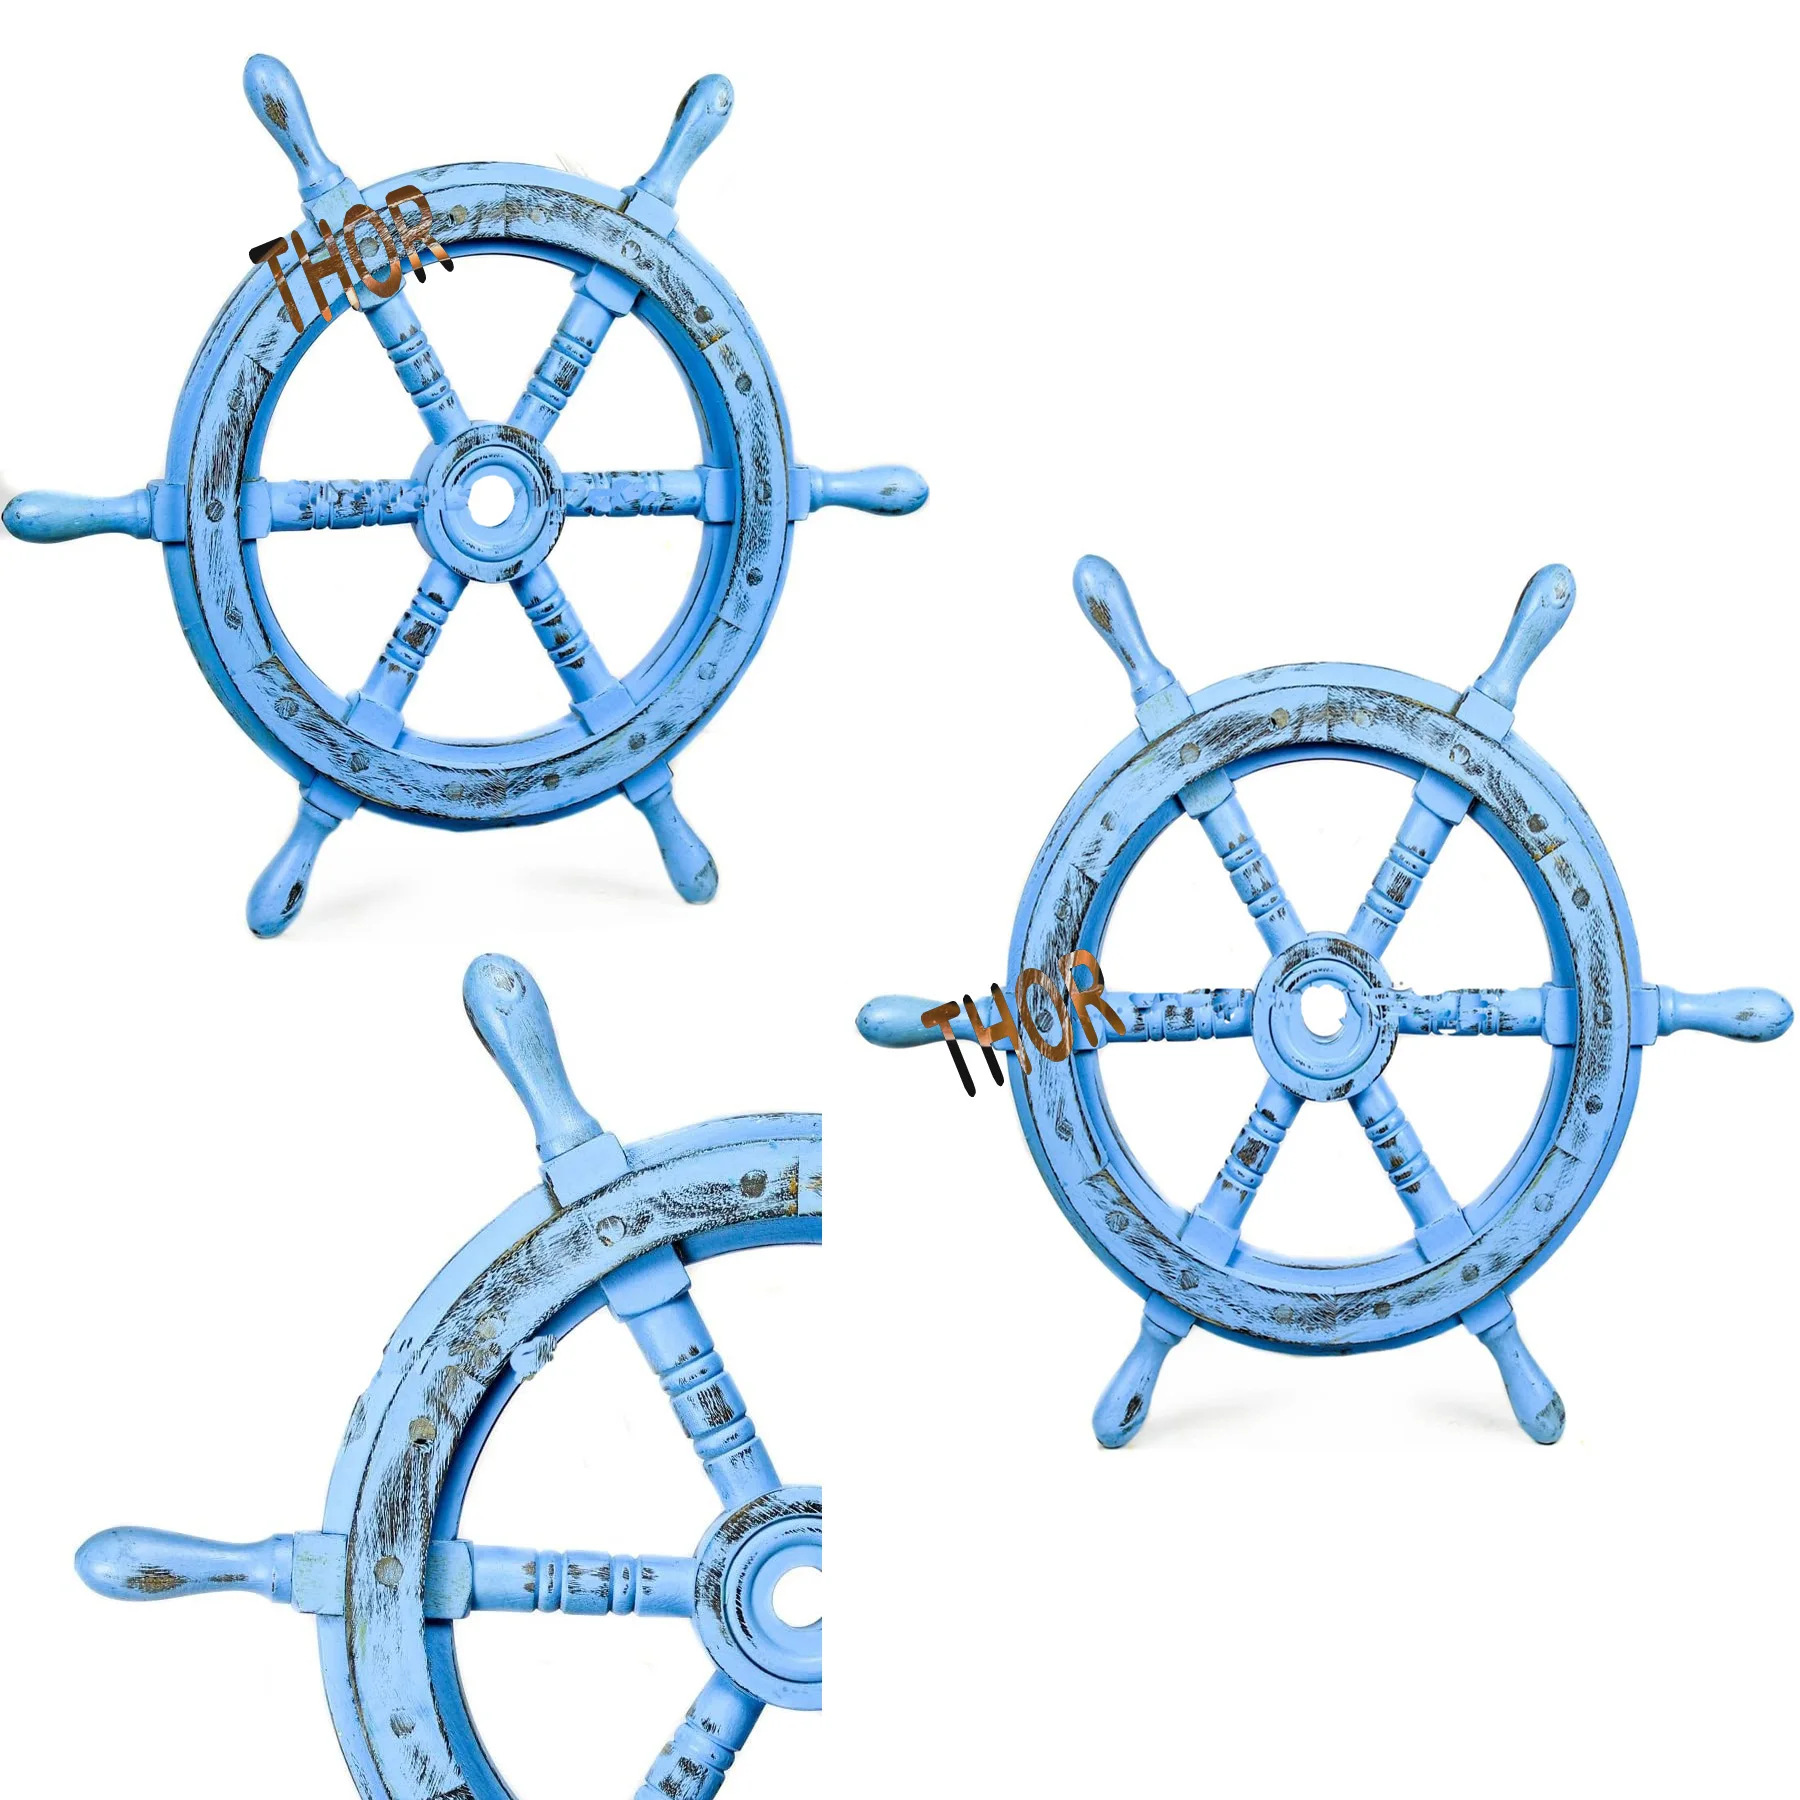 blue ship wheel clip art